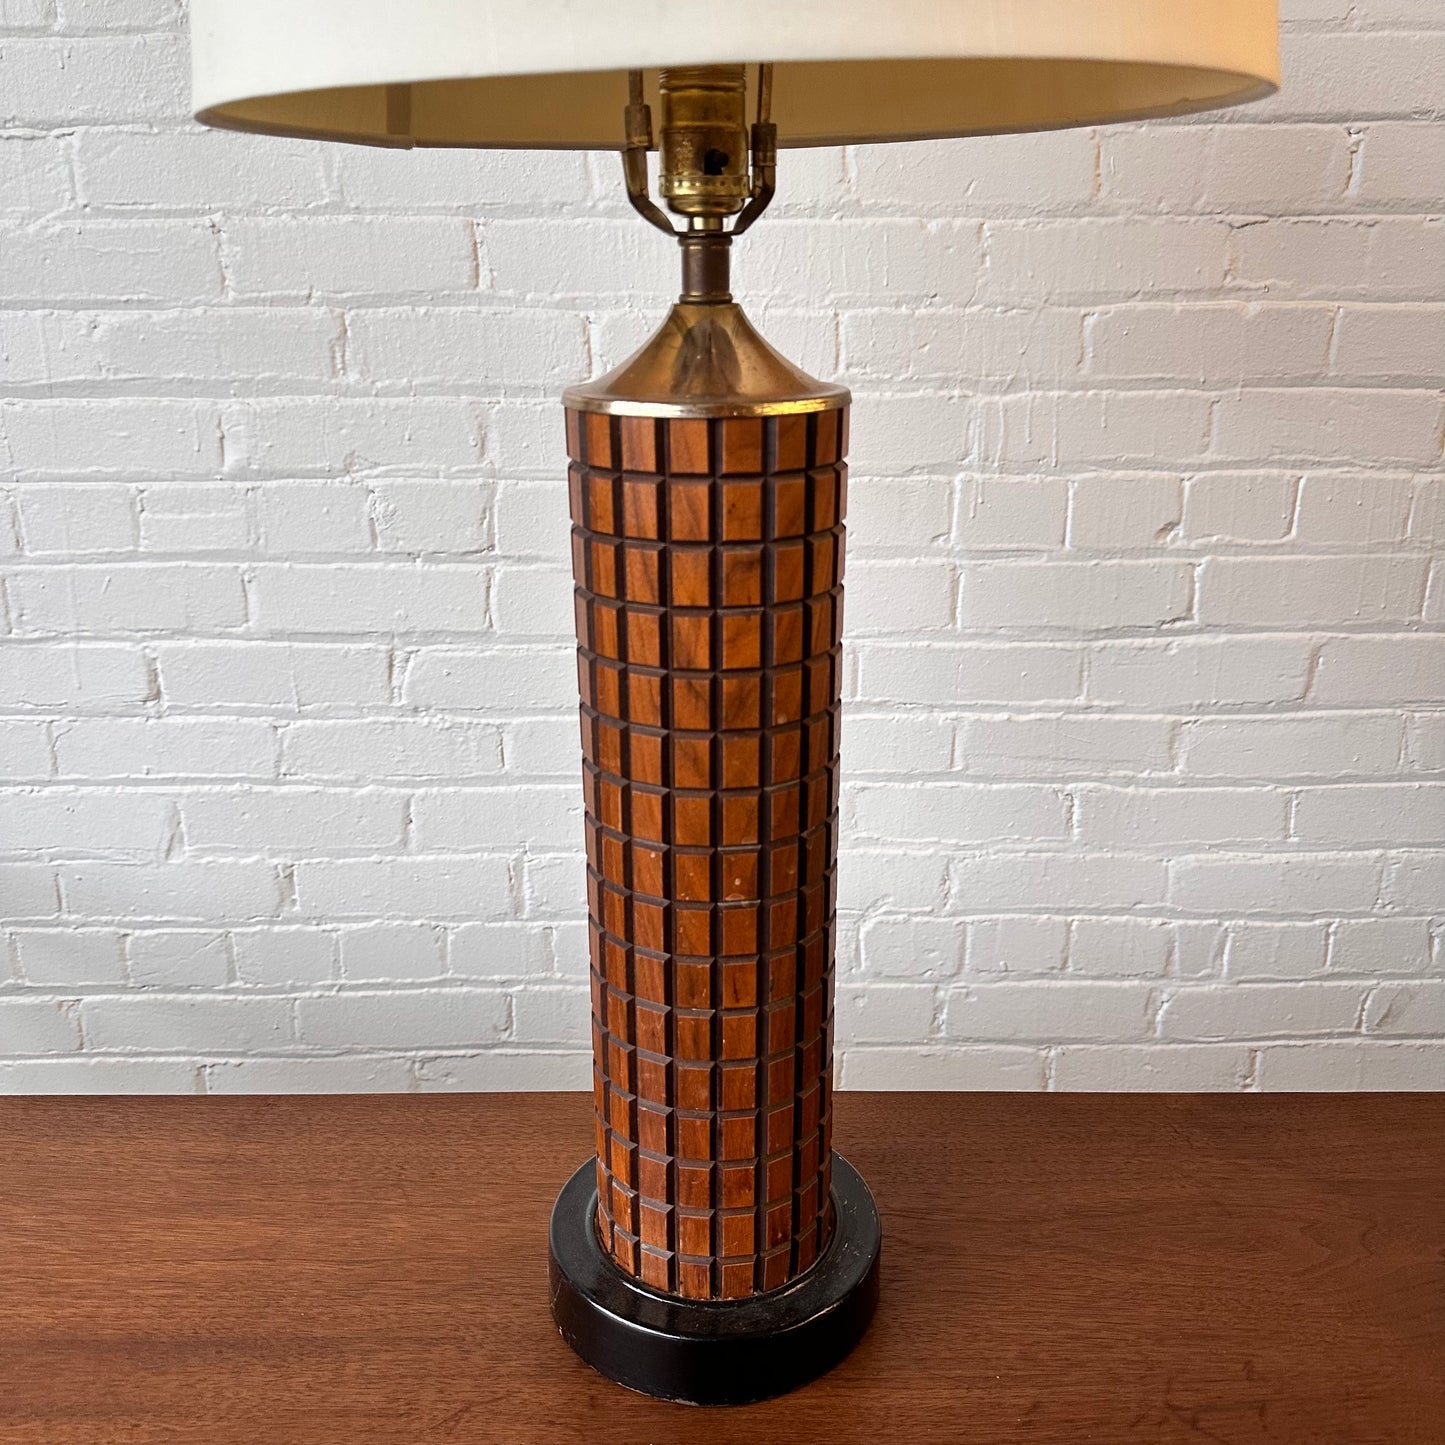 WALNUT AND BRASS 1964 WORLD'S FAIR TABLE LAMP